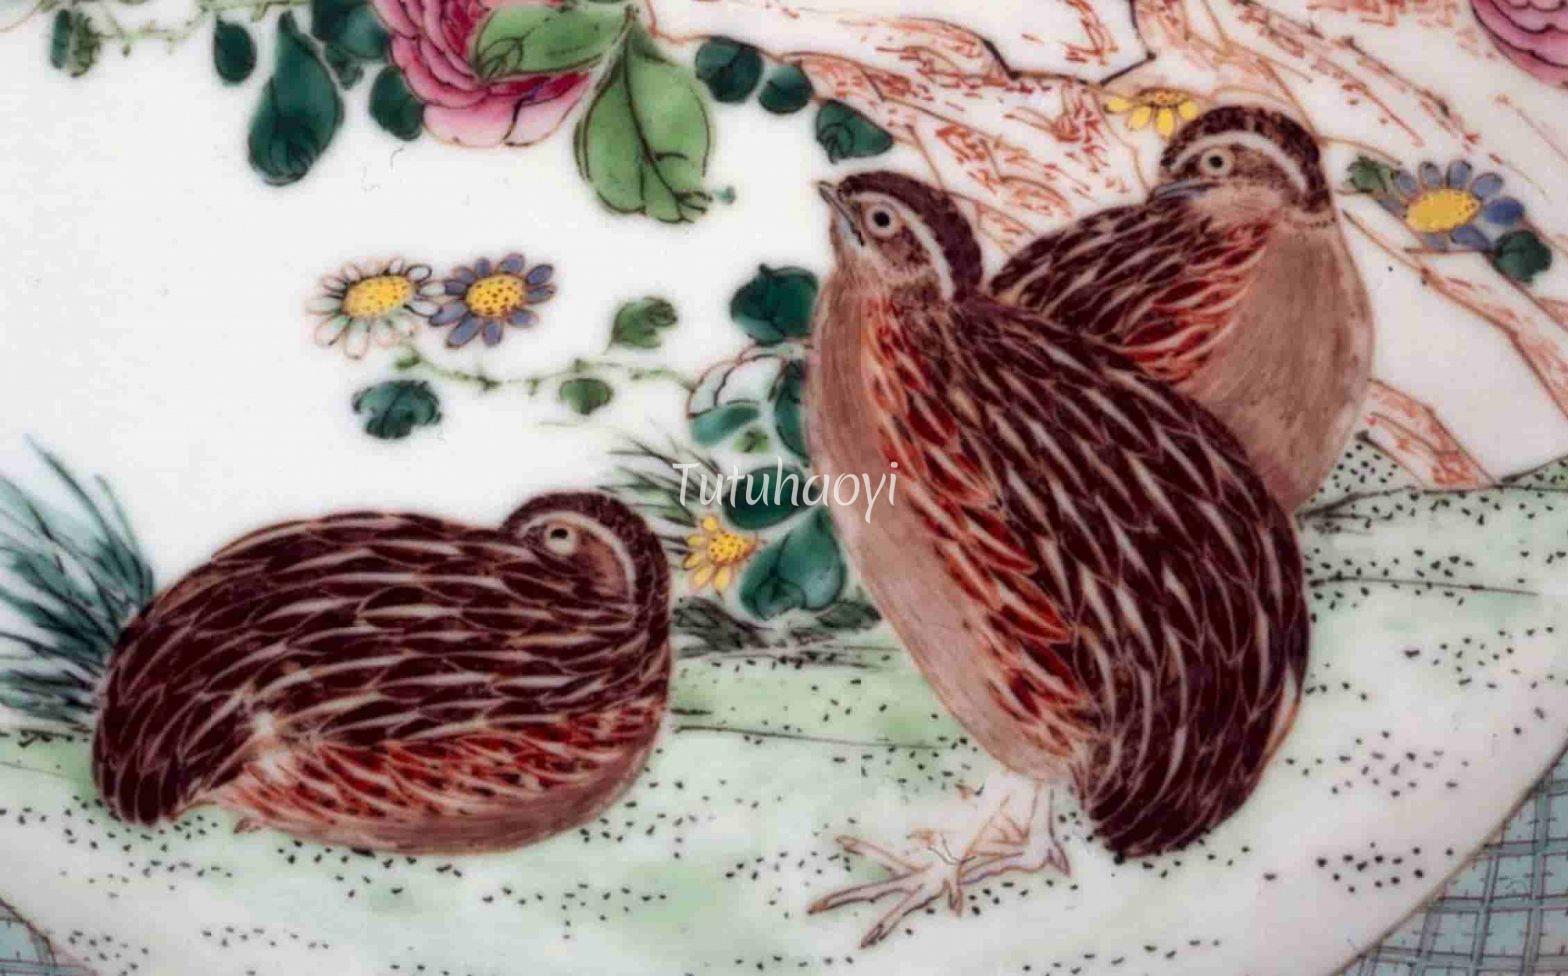 quail Chinese art motif Tutuhaoyi